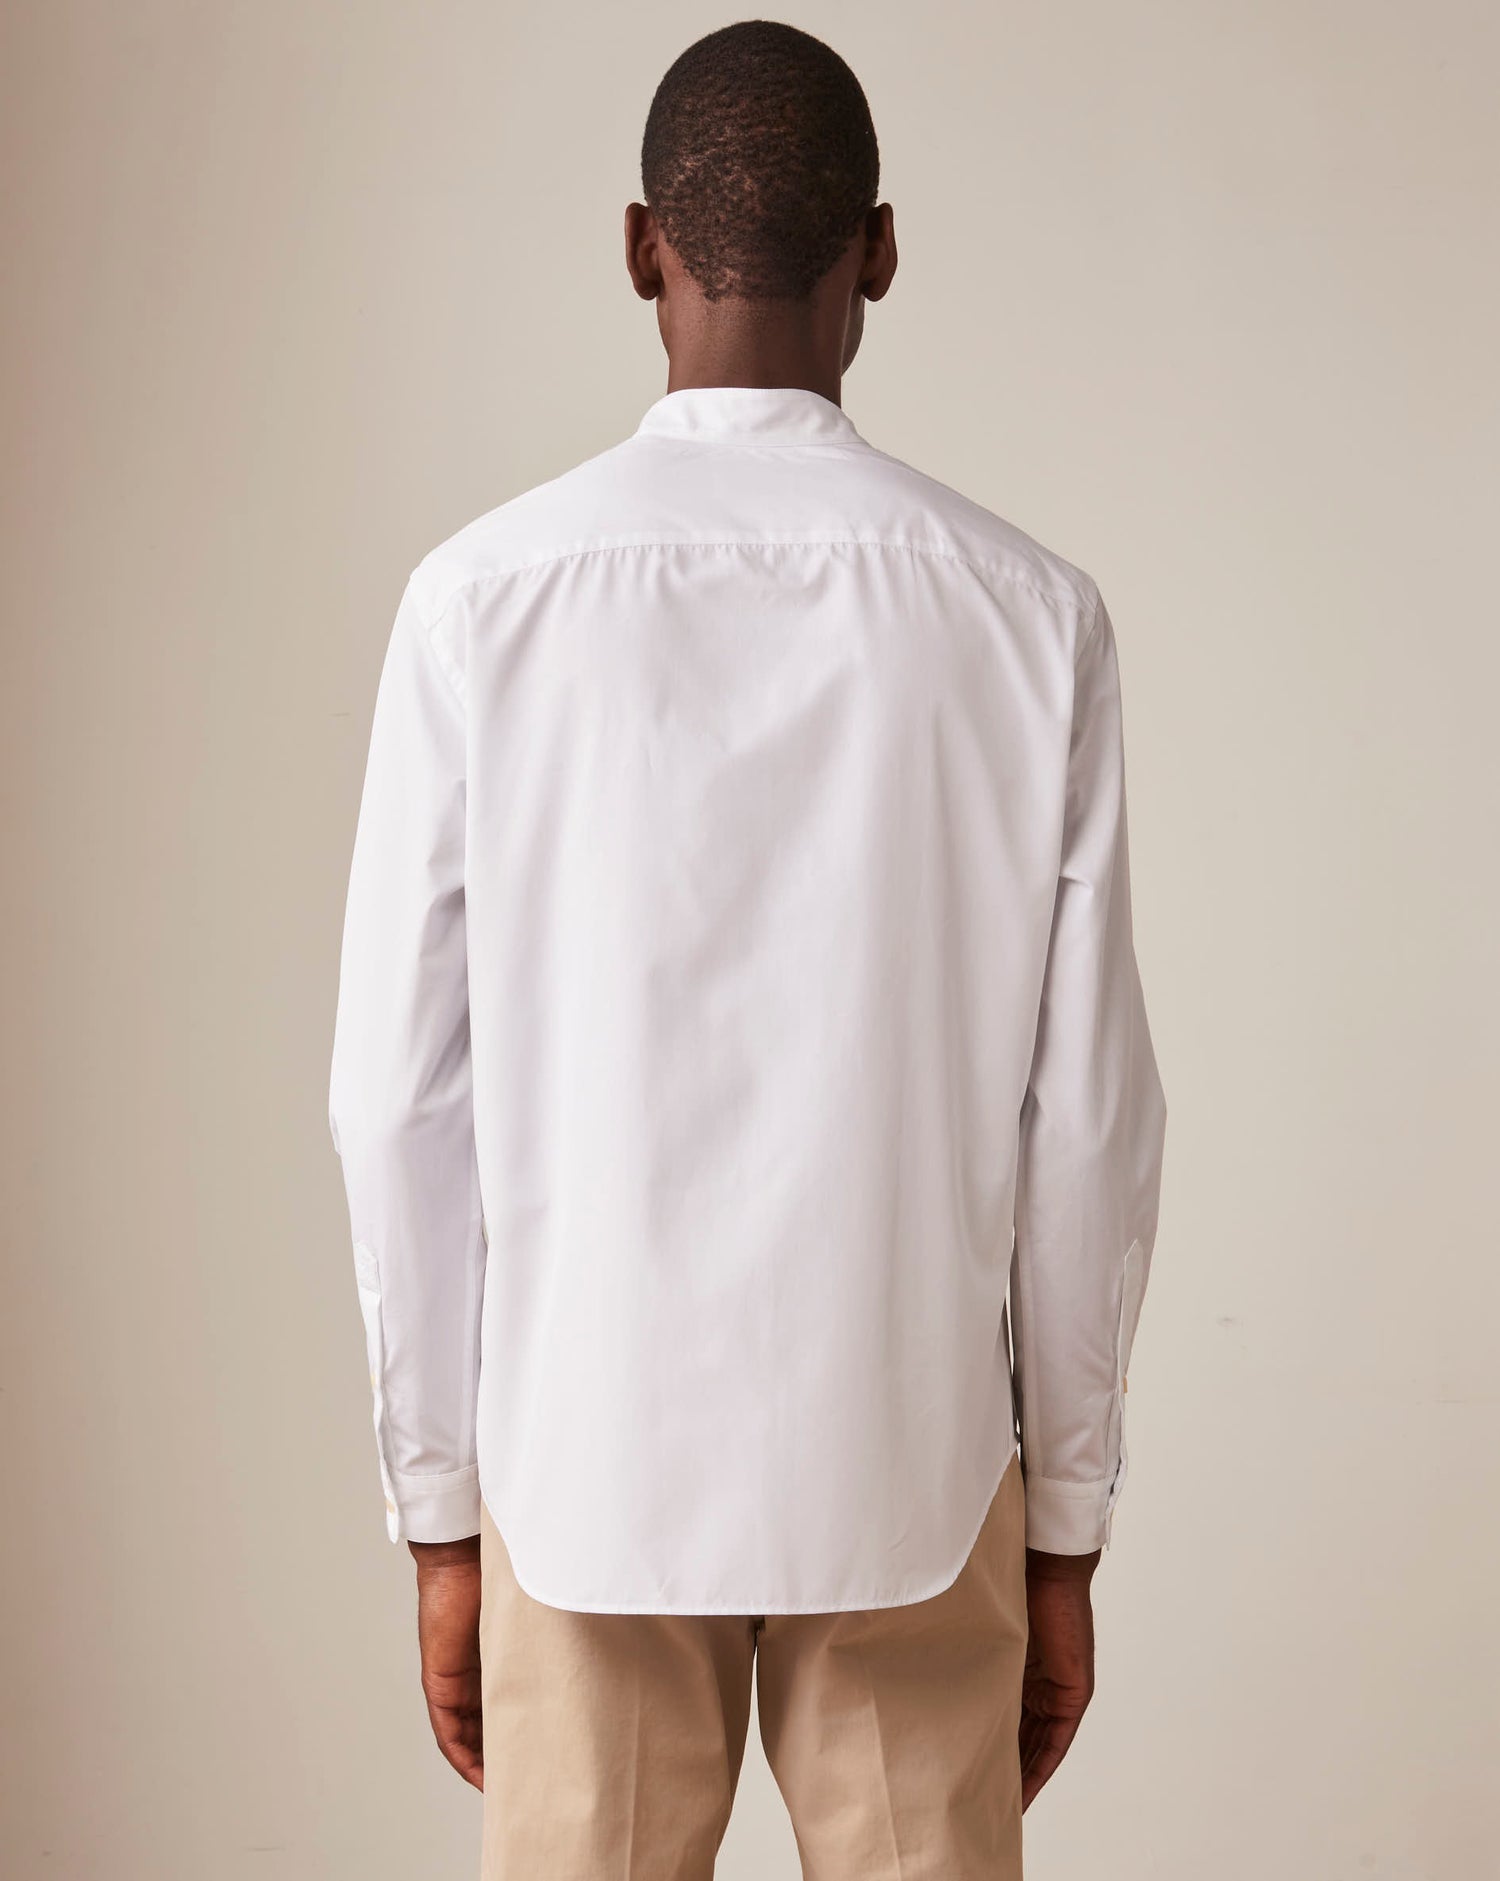 White Carl shirt - Poplin - Open straight Collar#2